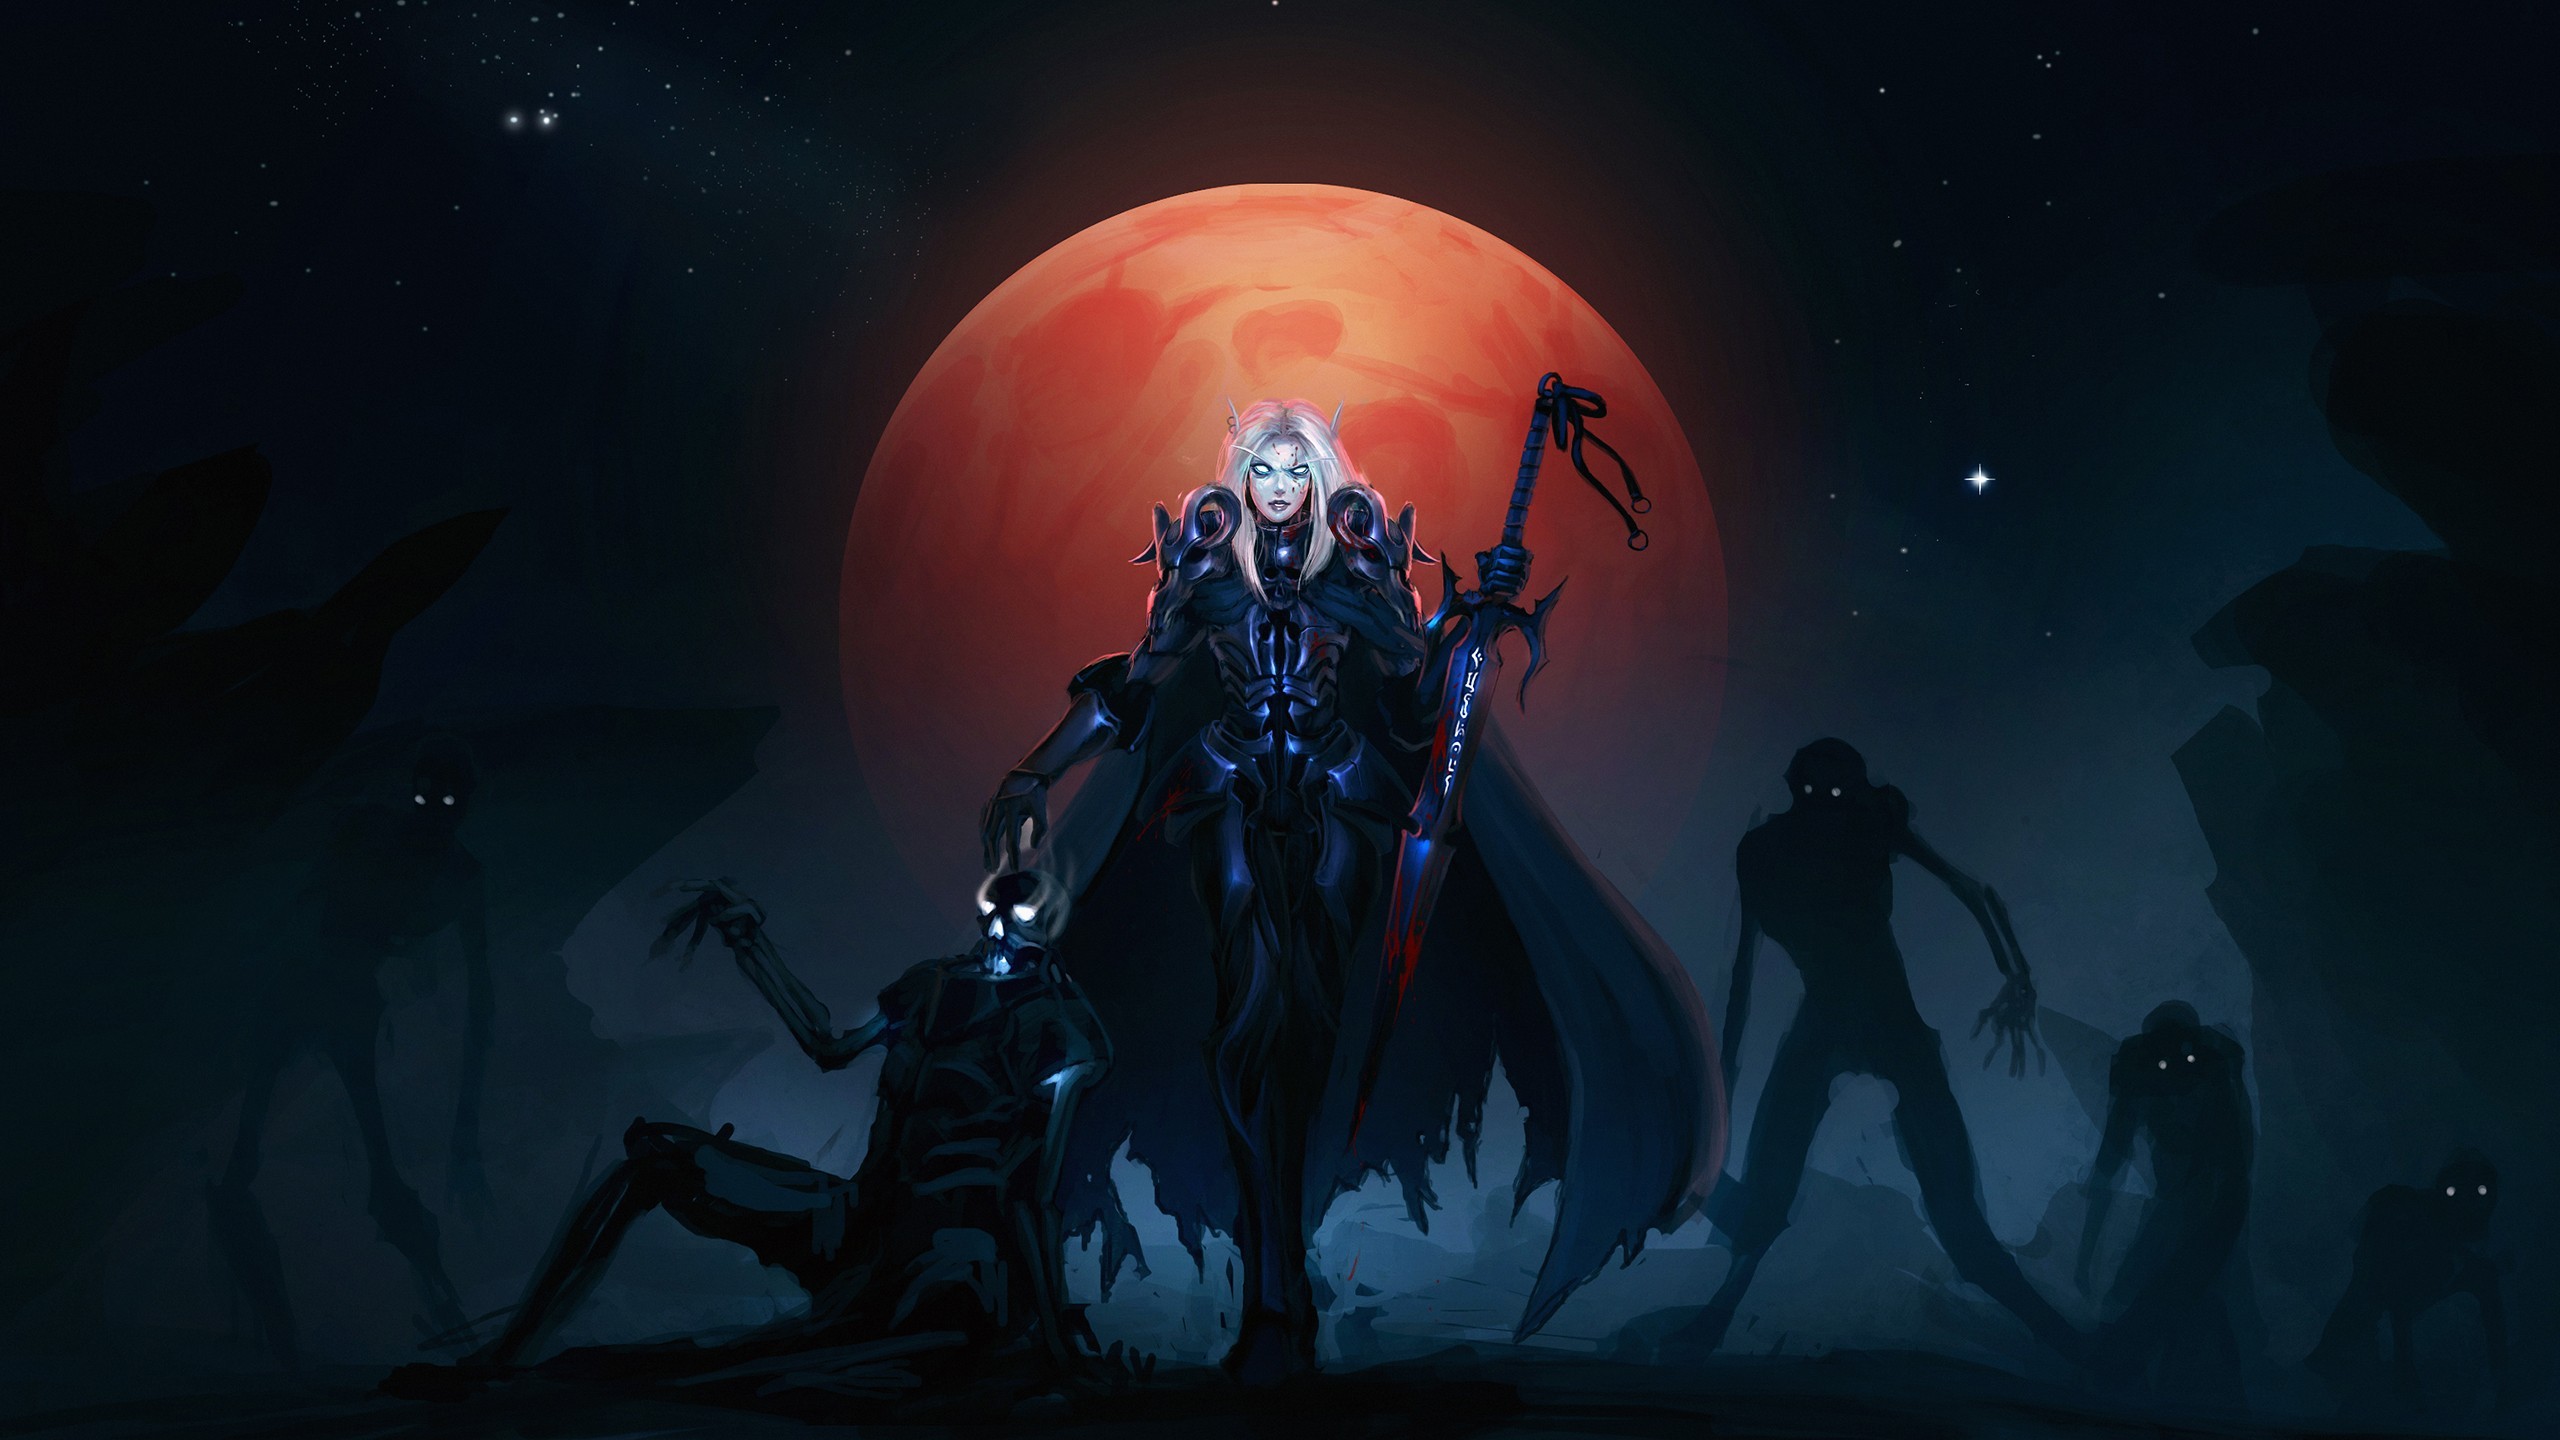 General 2560x1440 World of Warcraft fantasy girl video games PC gaming video game art video game girls fantasy art blood elves Death Knight